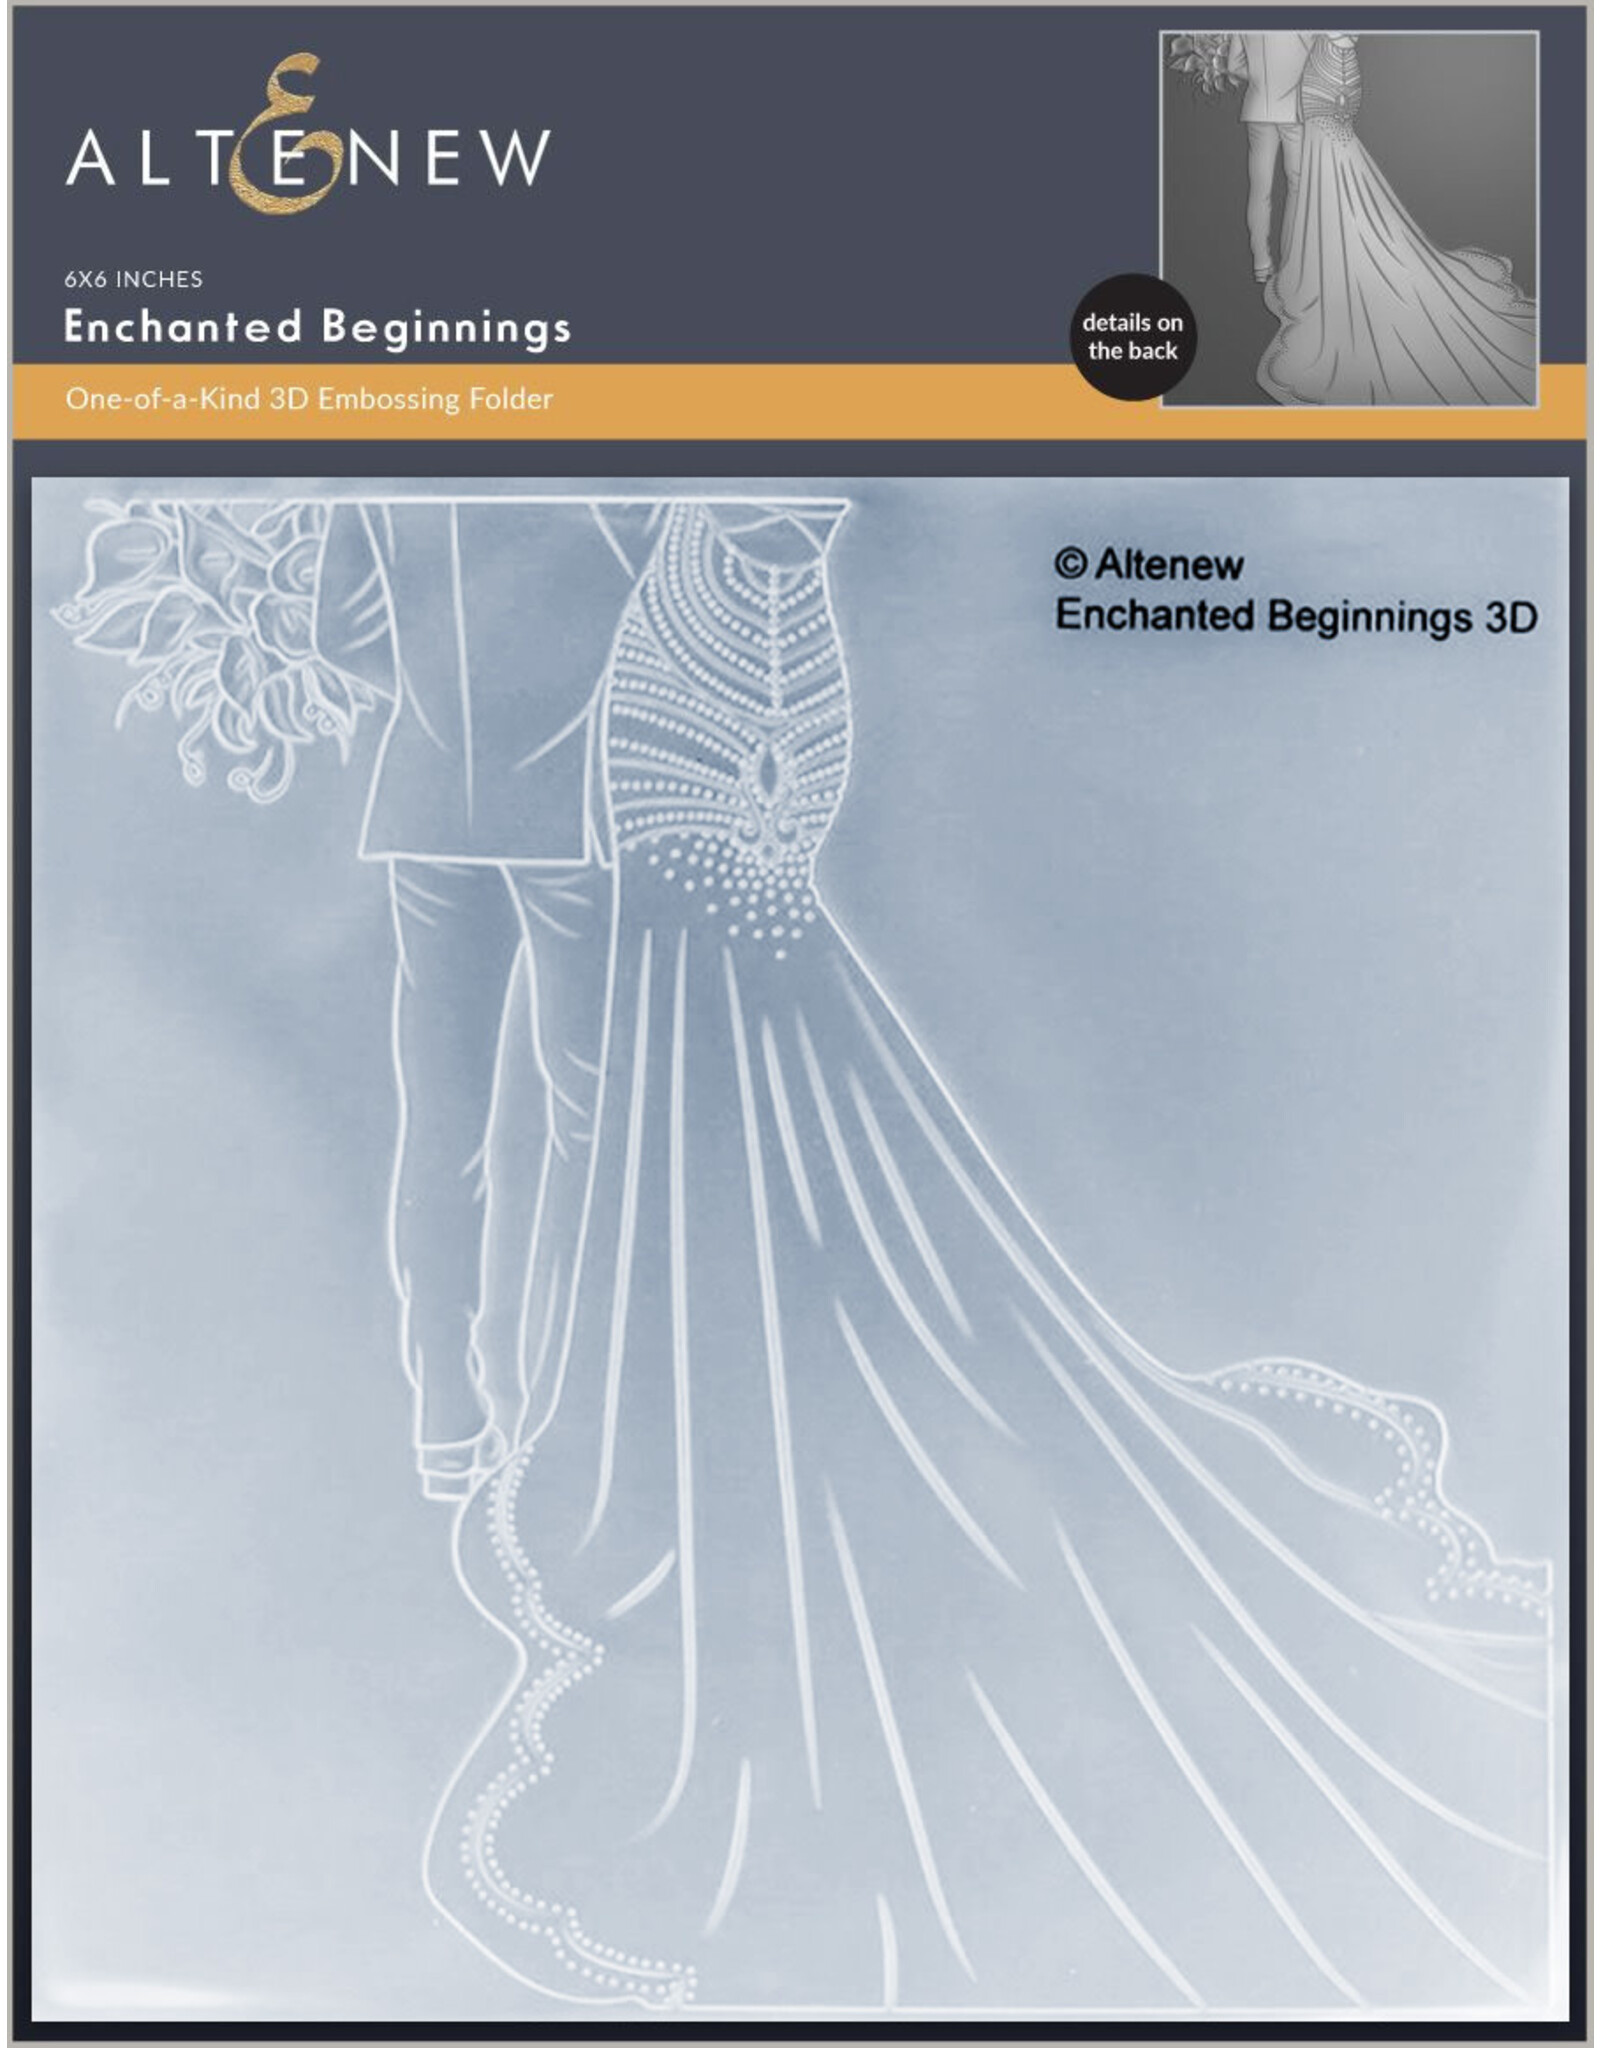 ALTENEW Enchanted Beginnings - Complete Bundle